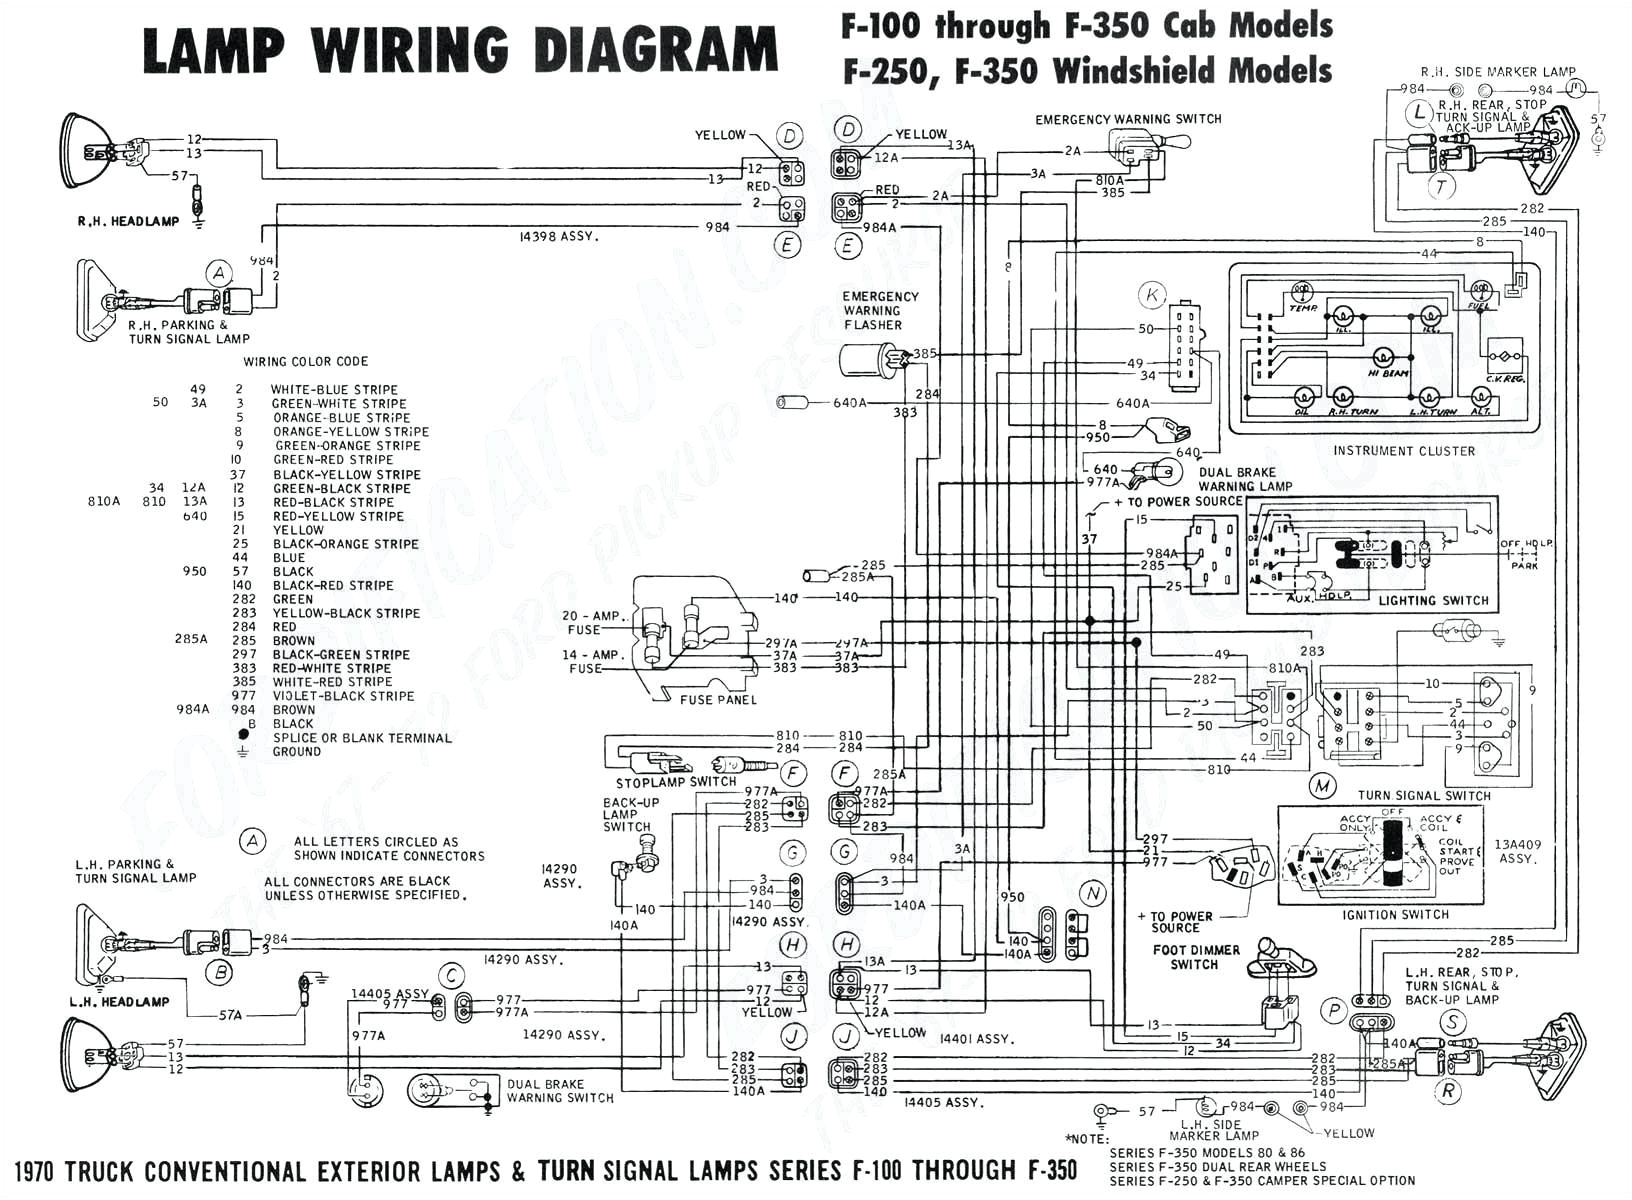 1990 jeep comanche wiring diagram wiring diagram note 1990 jeep comanche wiring diagram wiring diagram structure